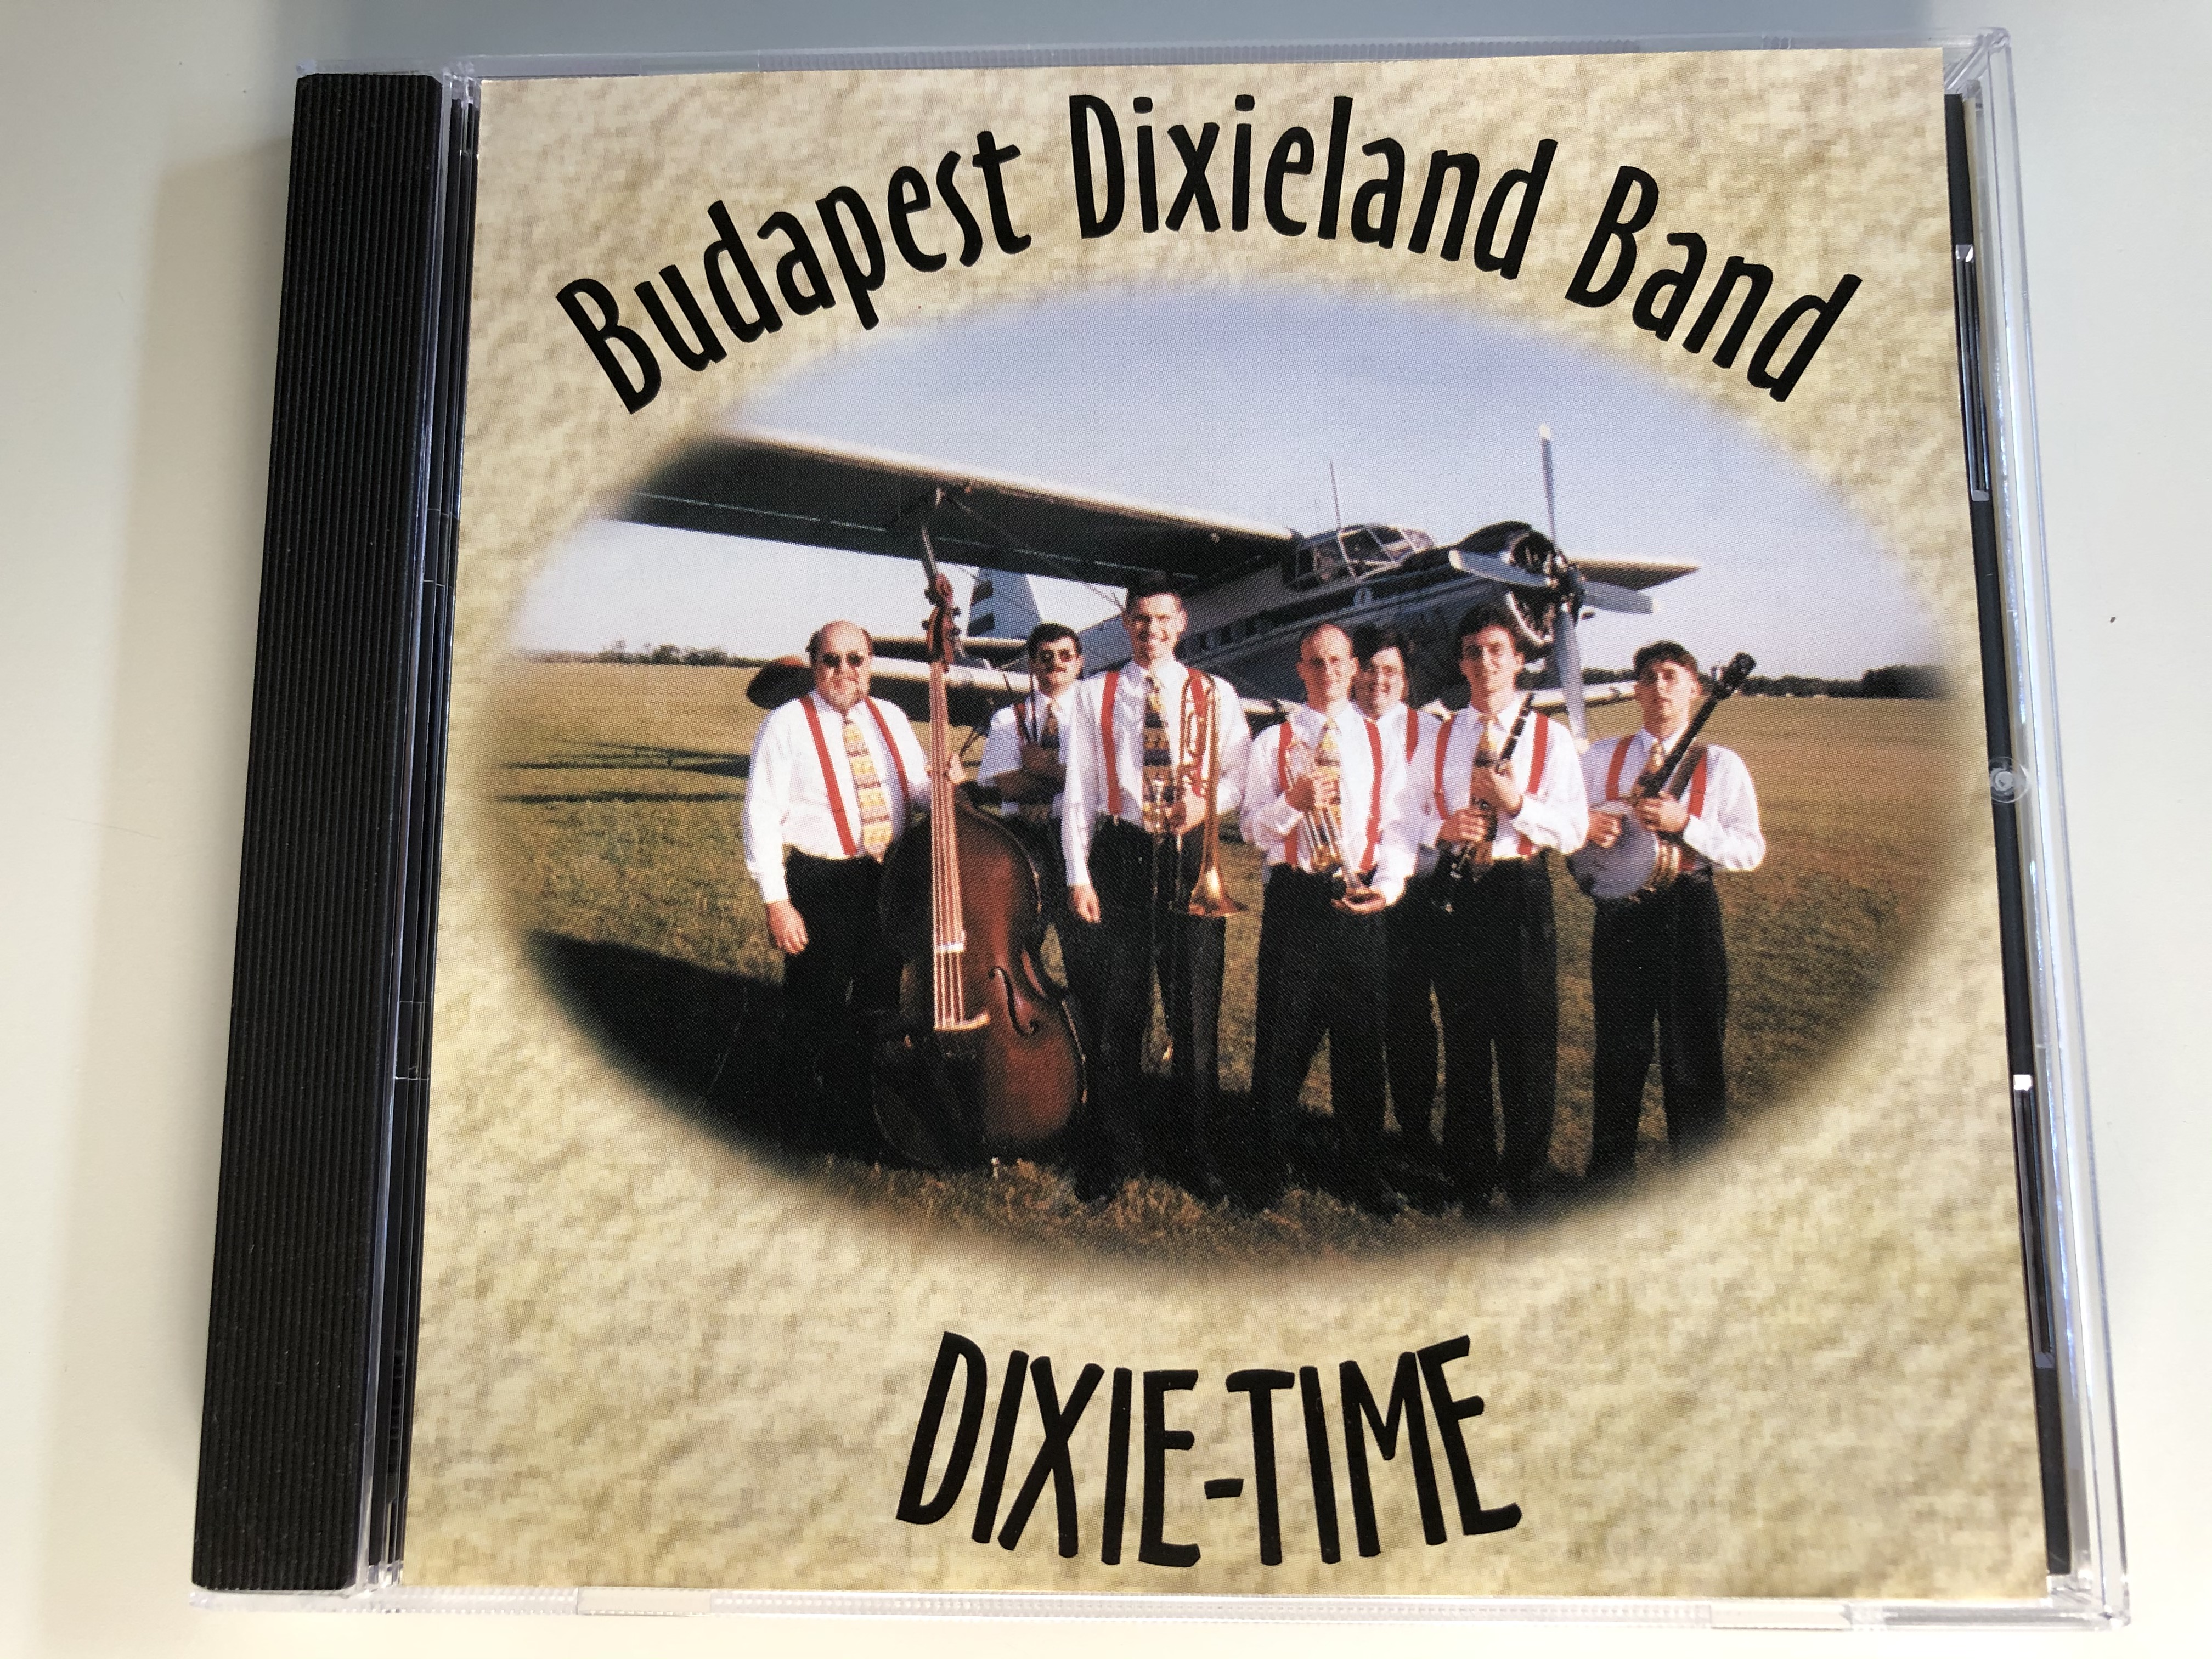 budapest-dixieland-band-dixie-time-audio-cd-1998-bud-100-1-.jpg